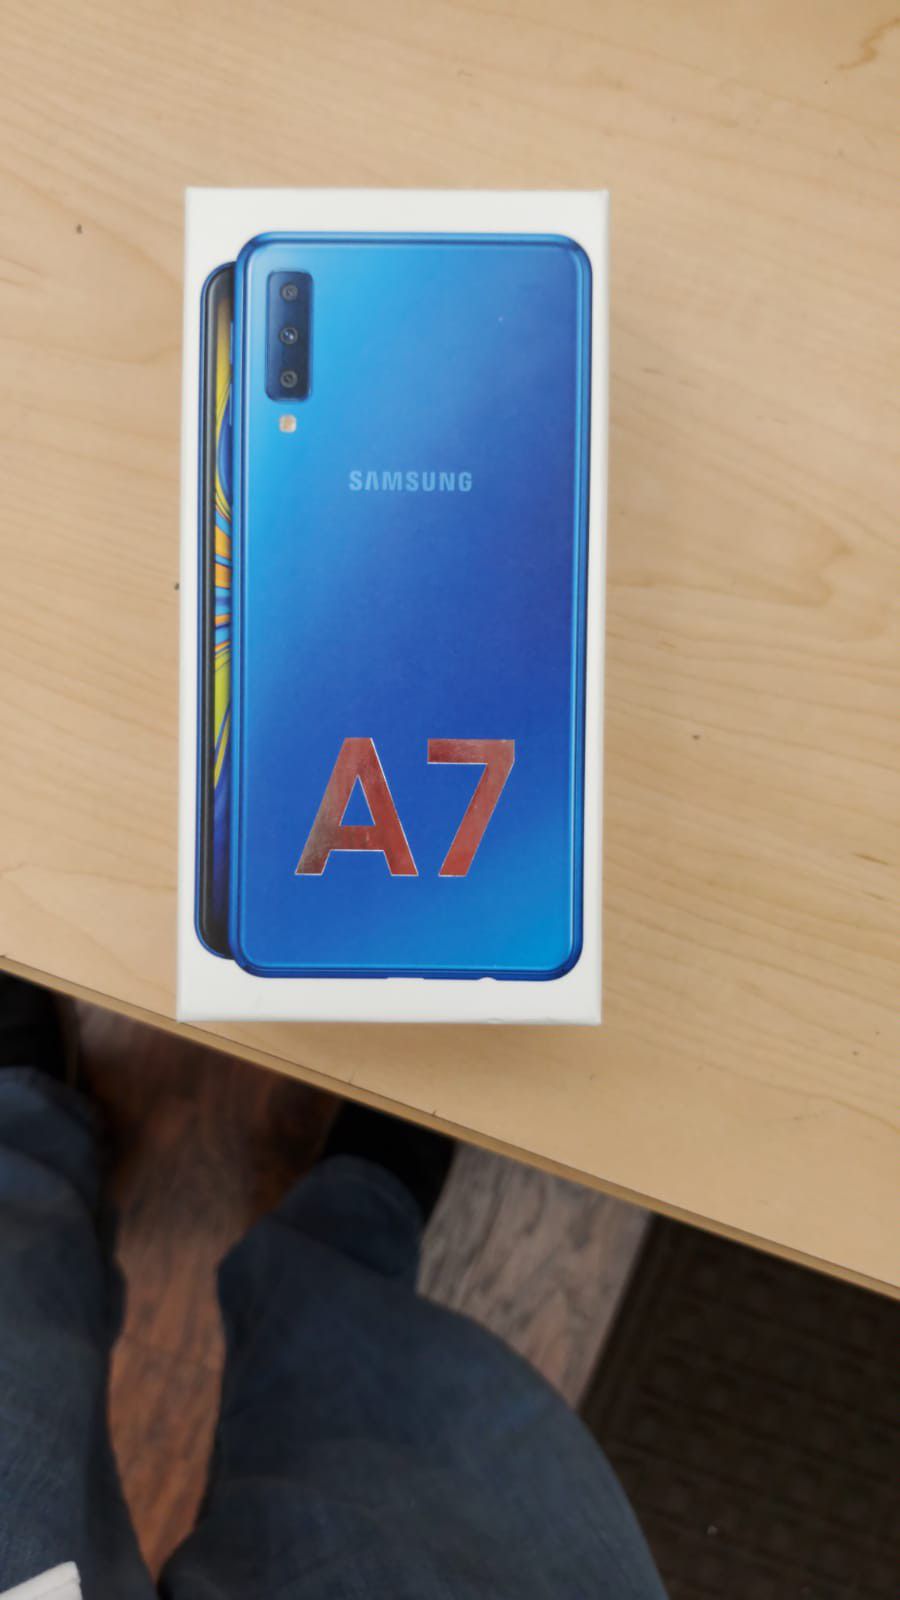 Brand new Samsung A7 unlocked with warranty